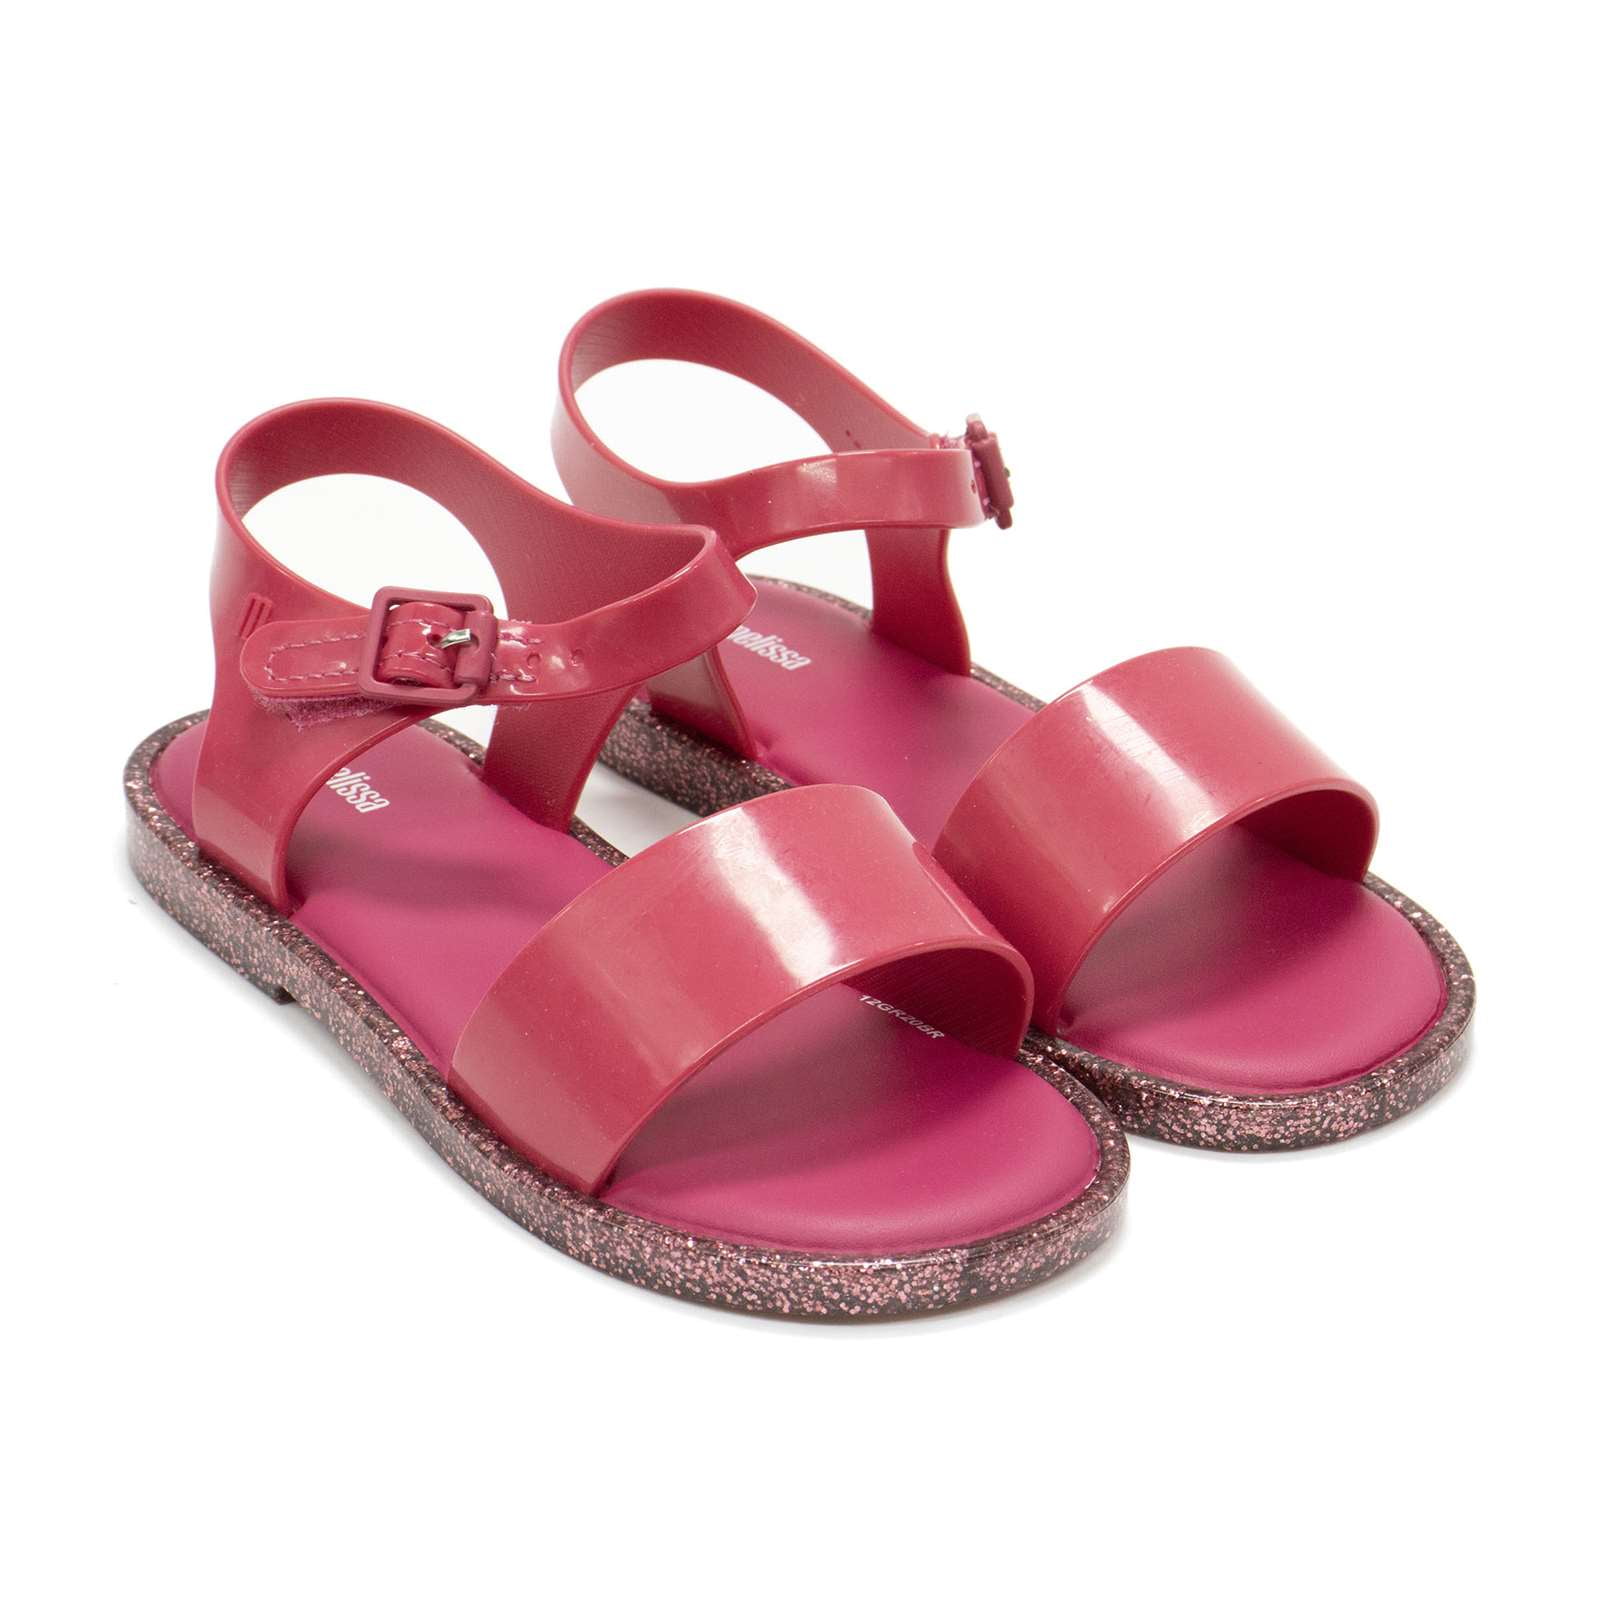 Rose kids Girls Mini Melissa Shoes Sandals Summer Cute Toddler US Size 6-11 